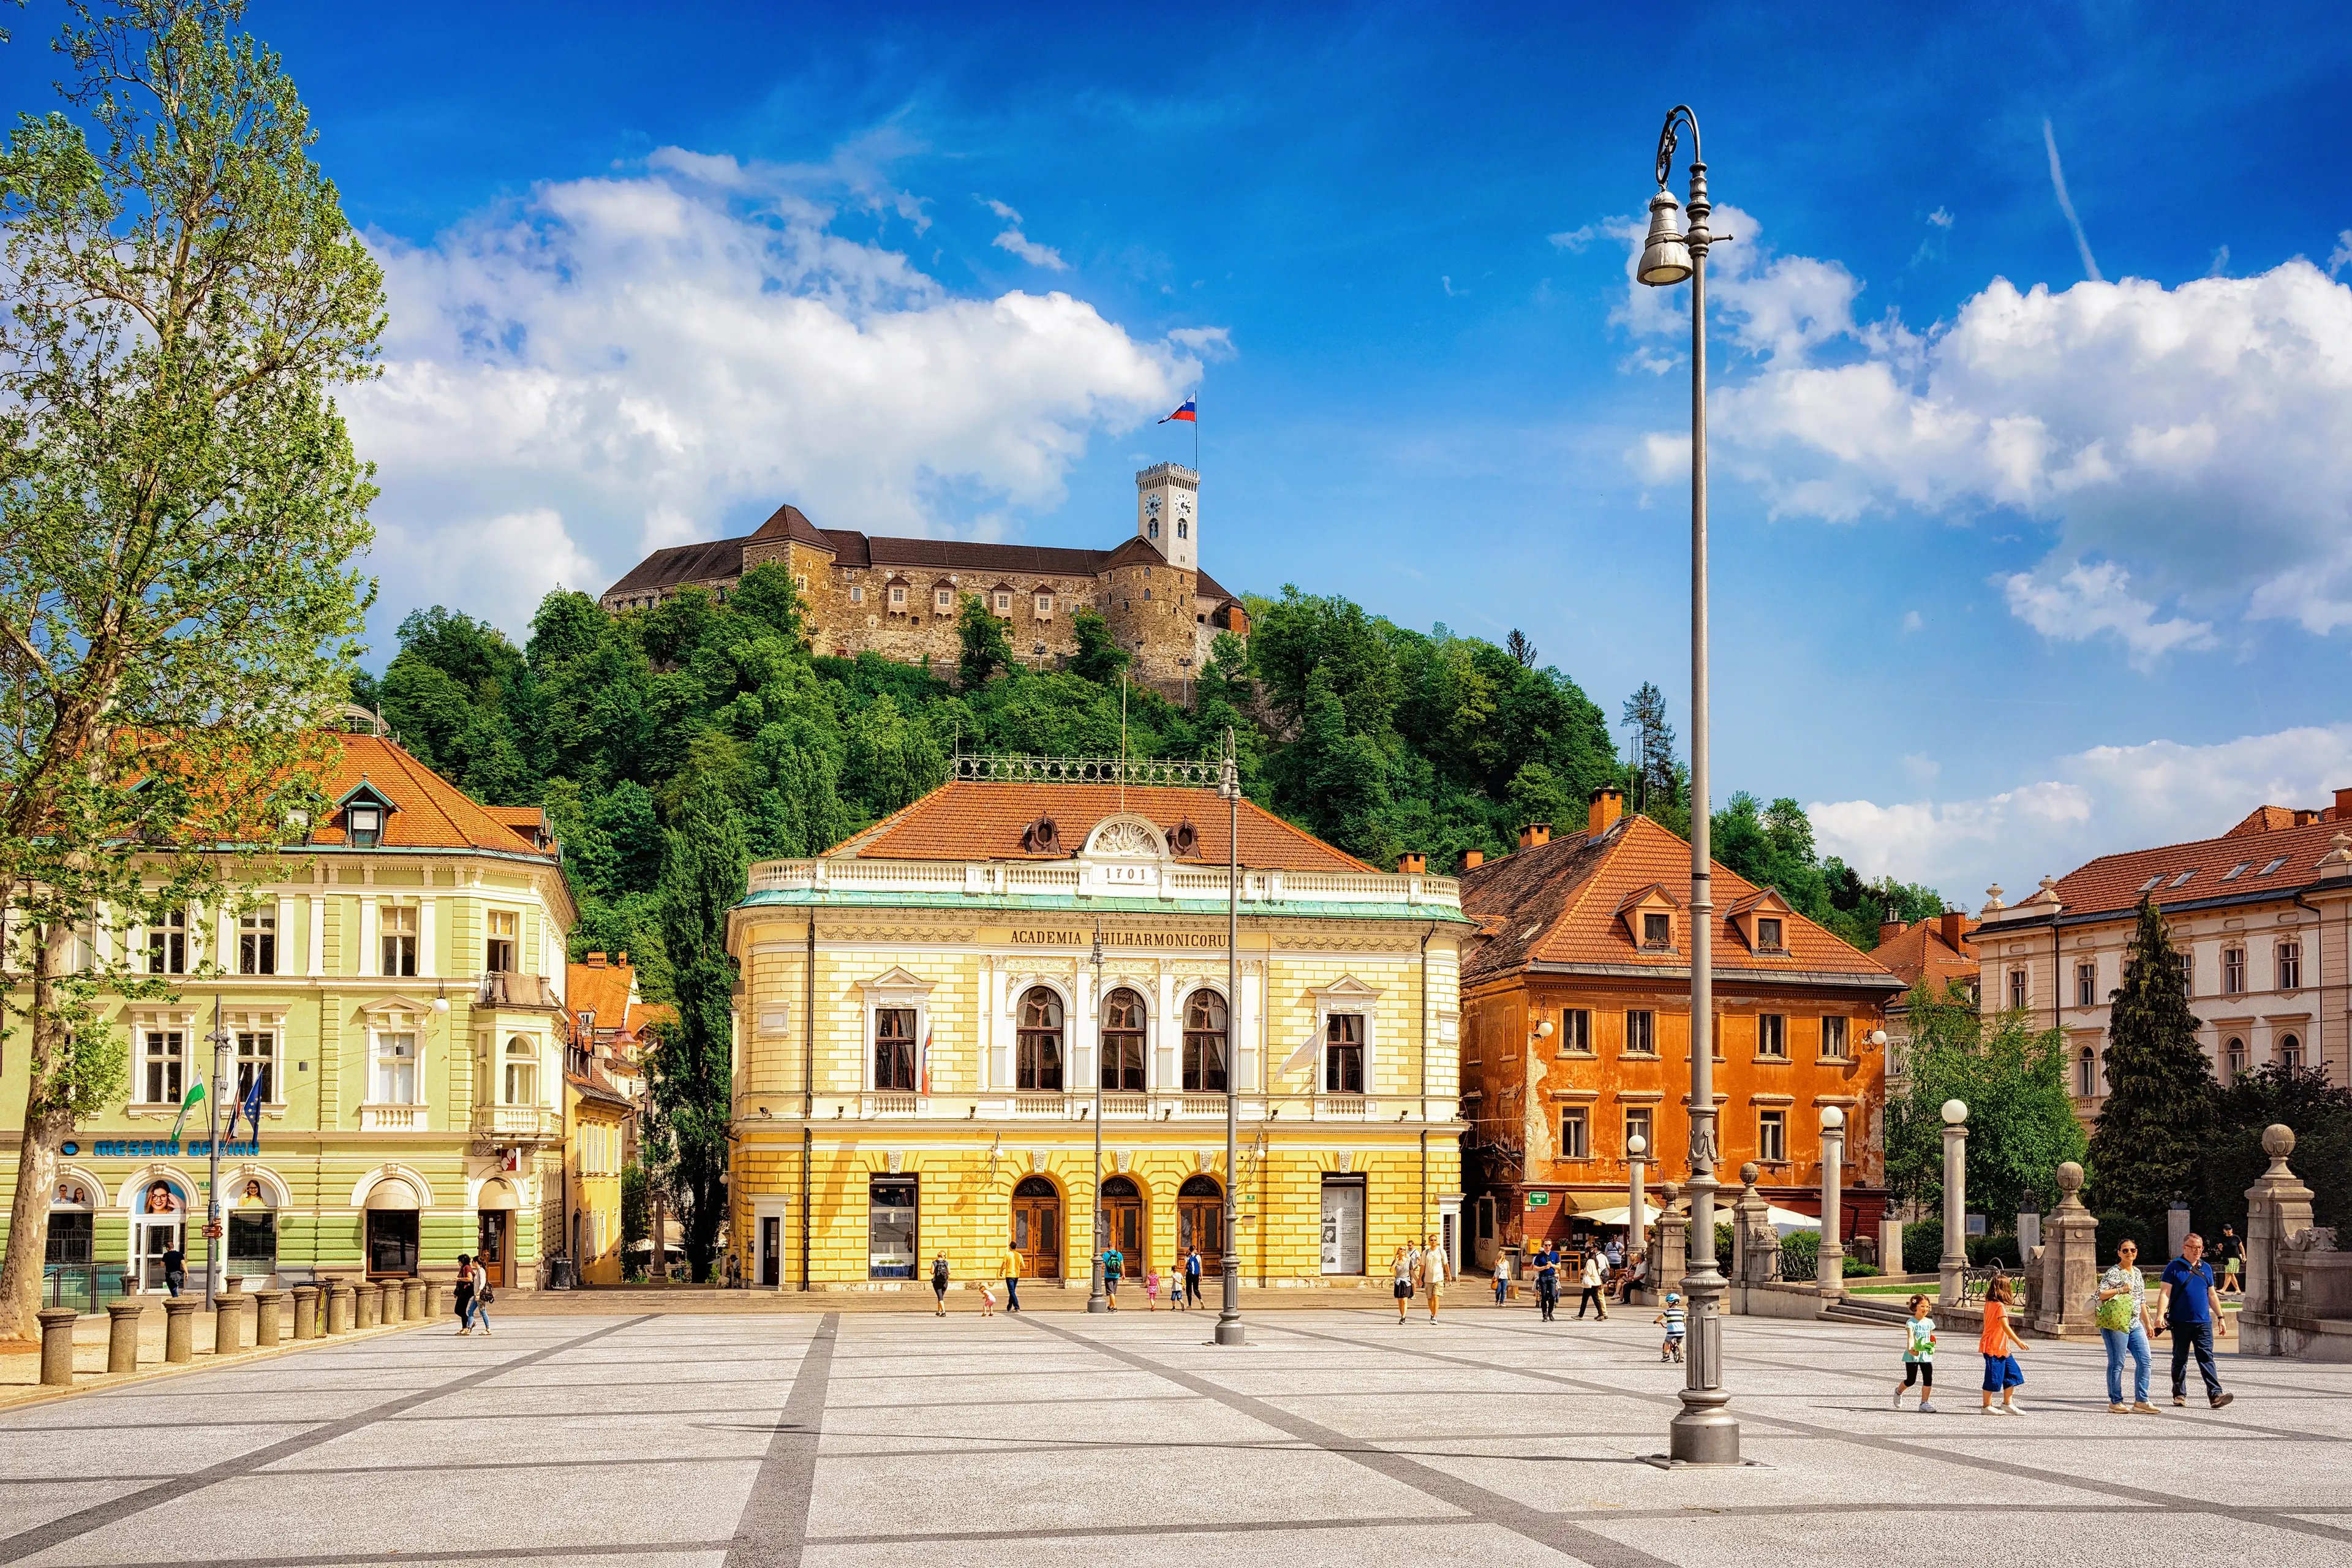 2-Day Outdoor Adventure Itinerary in Ljubljana, Slovenia